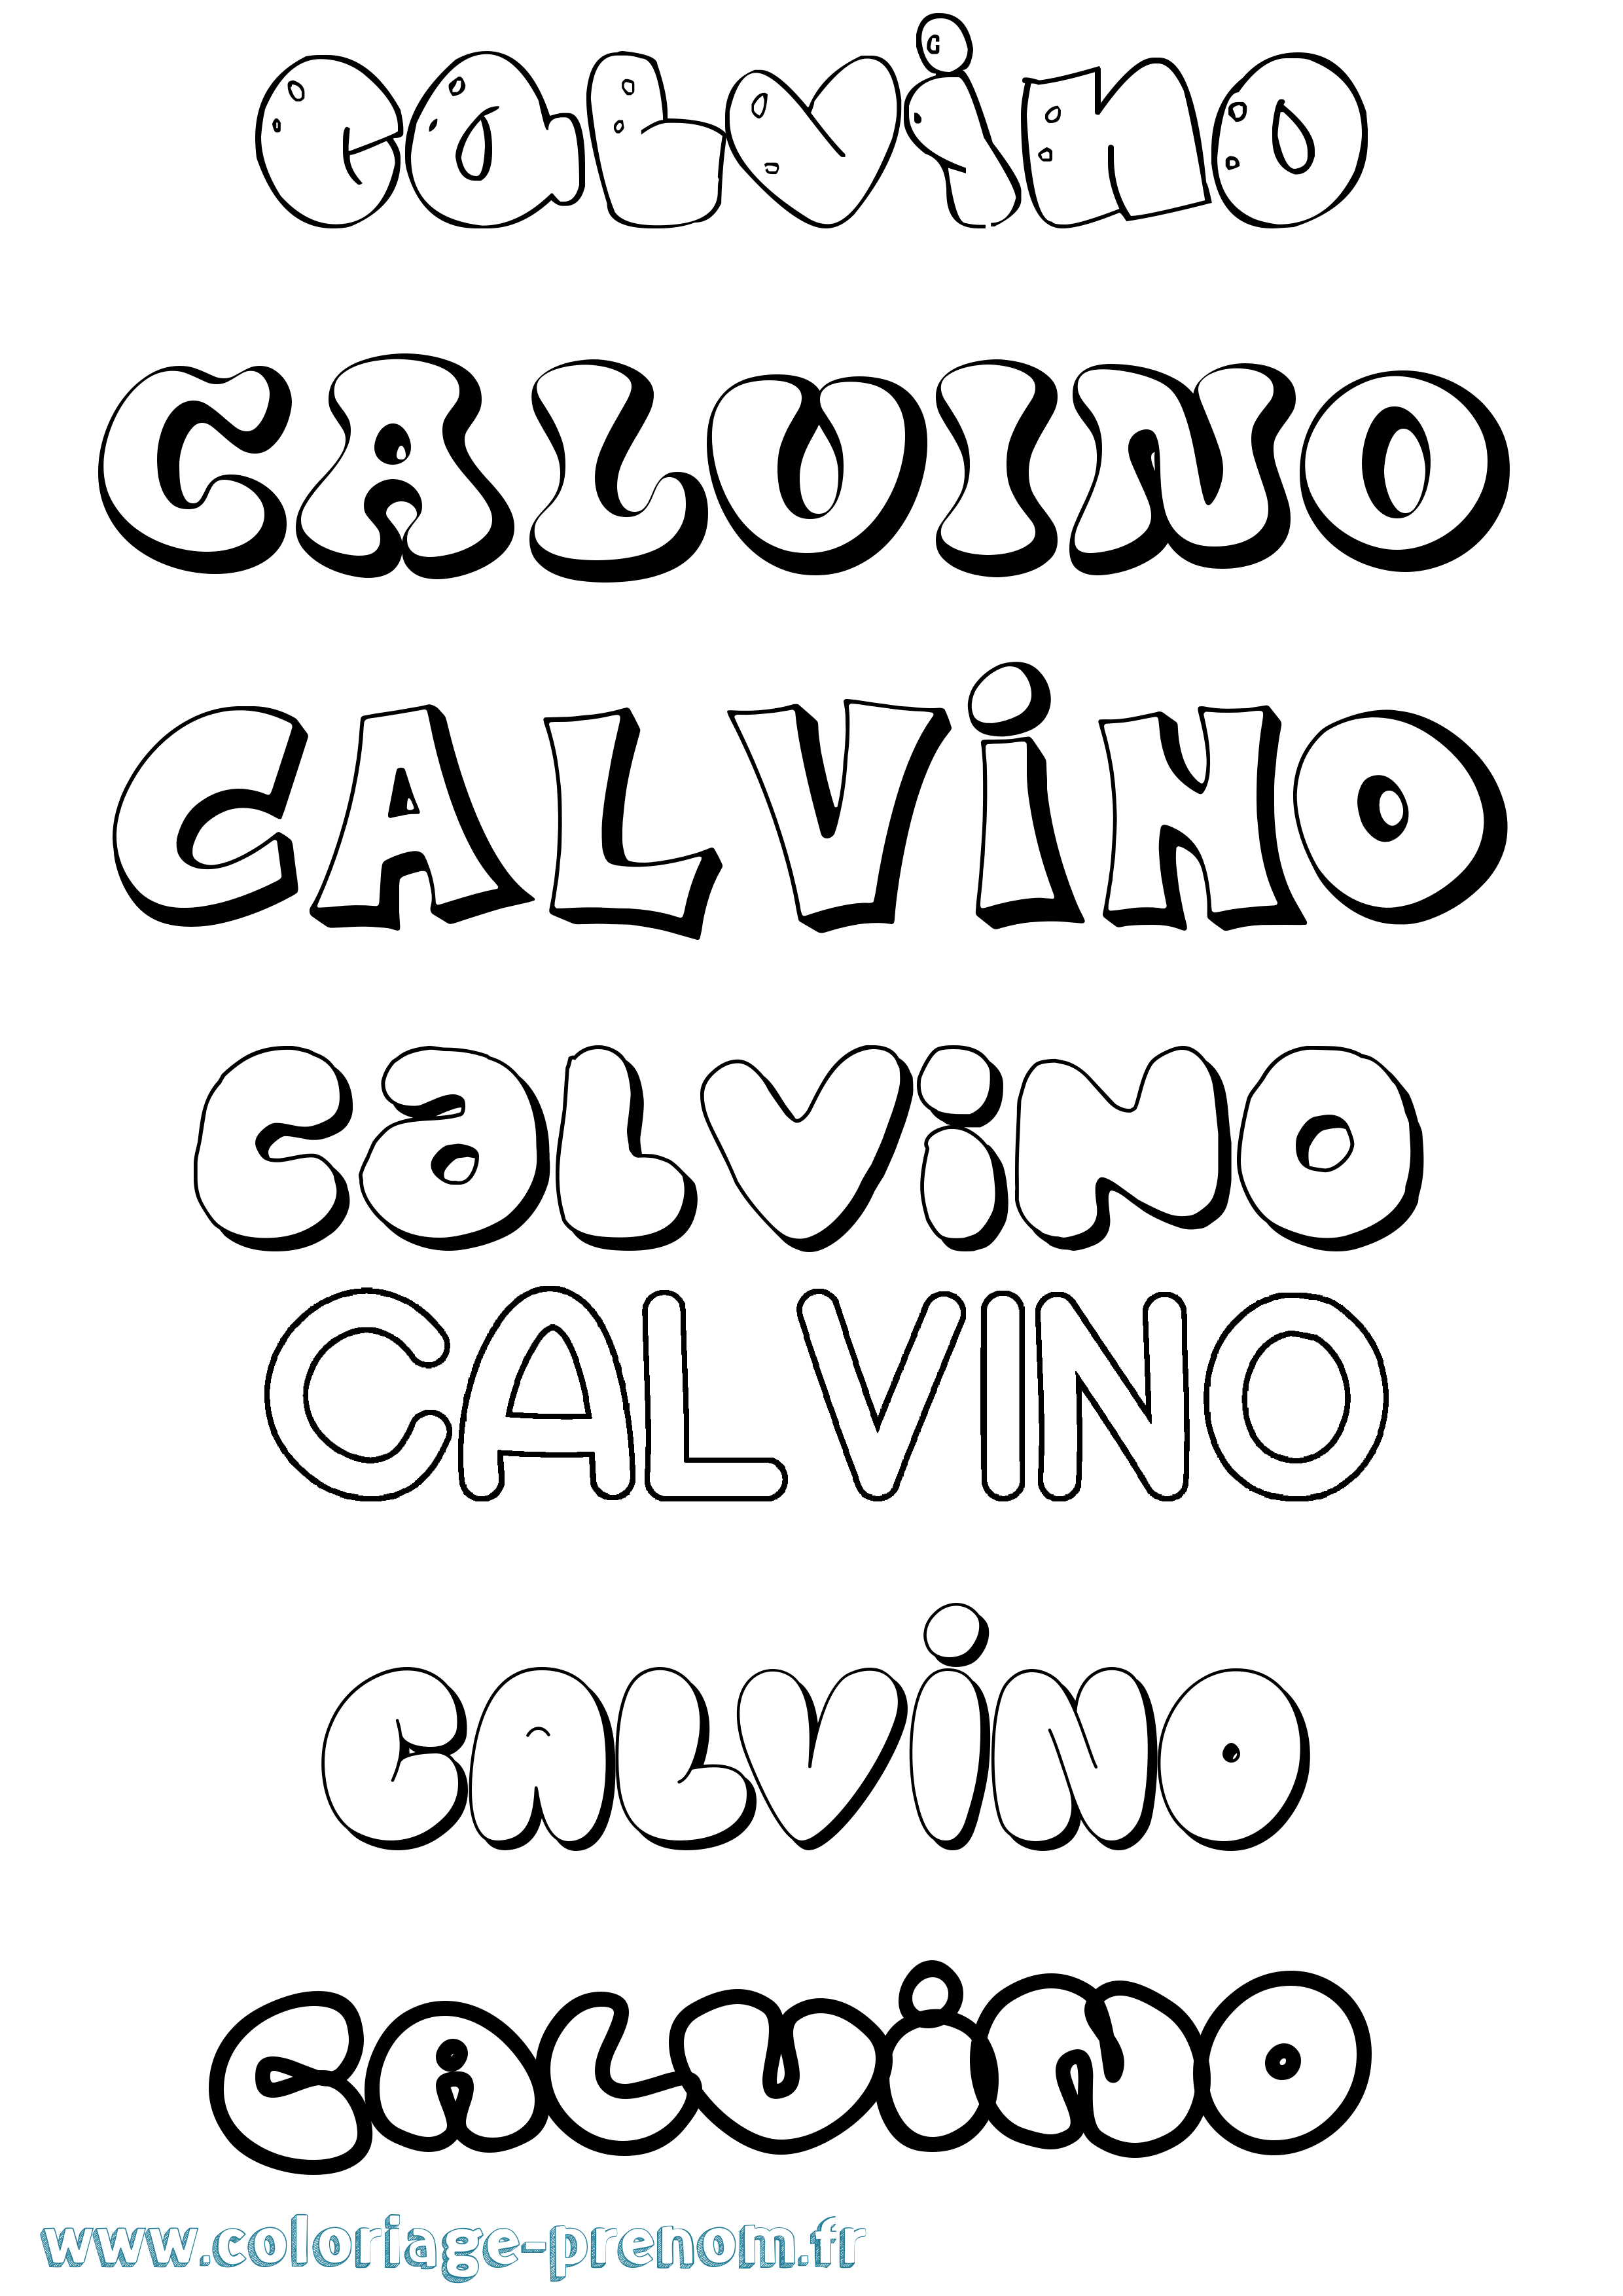 Coloriage prénom Calvino Bubble